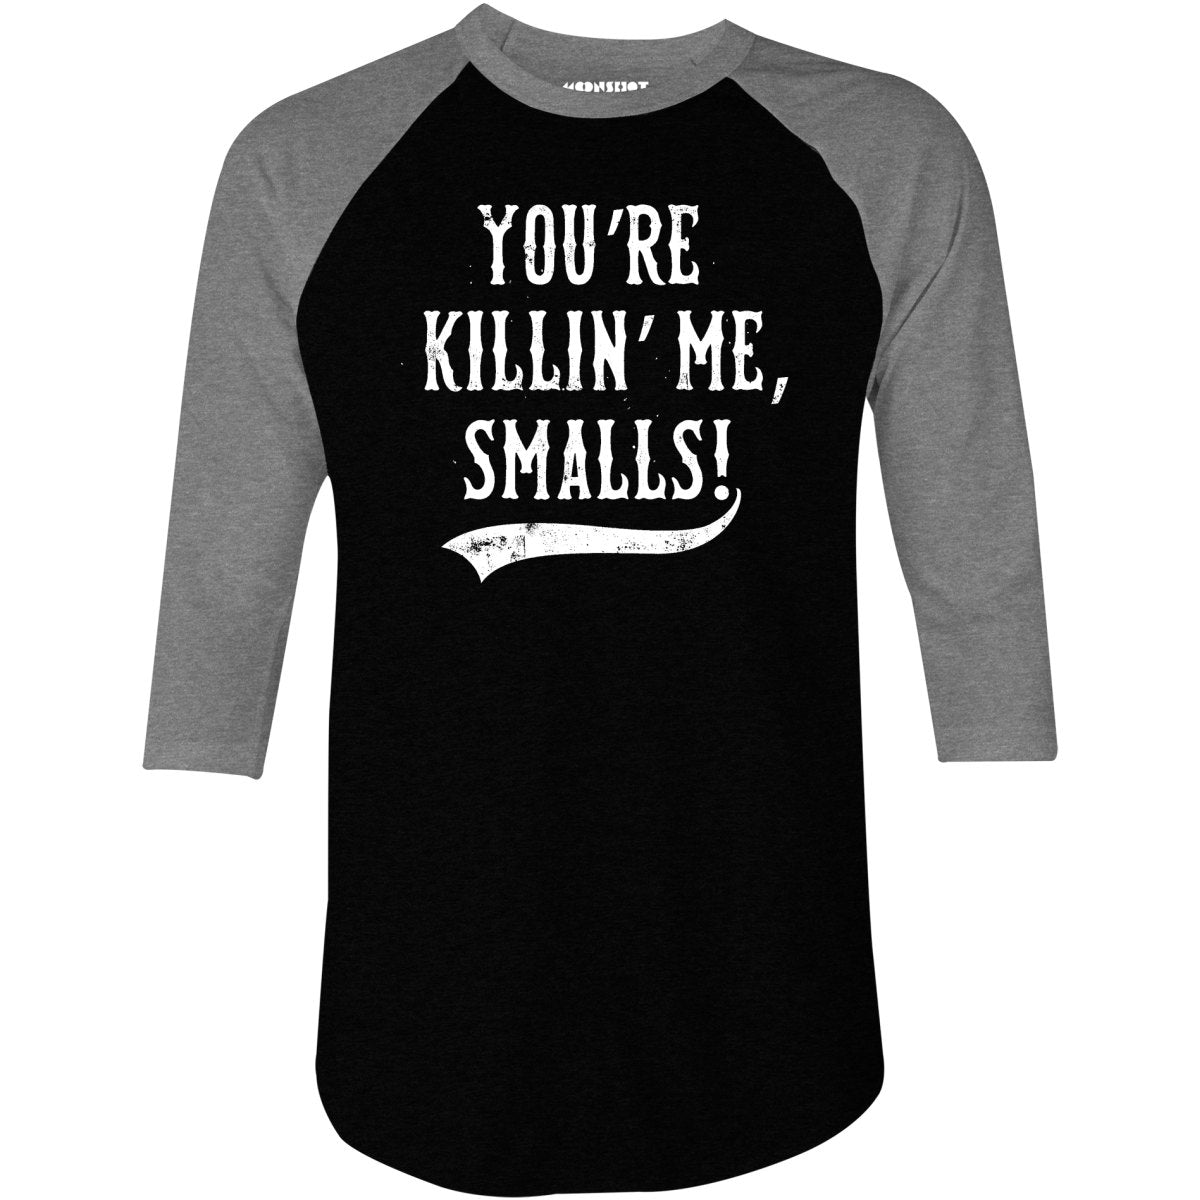 You're Killin' Me, Smalls! - 3/4 Sleeve Raglan T-Shirt